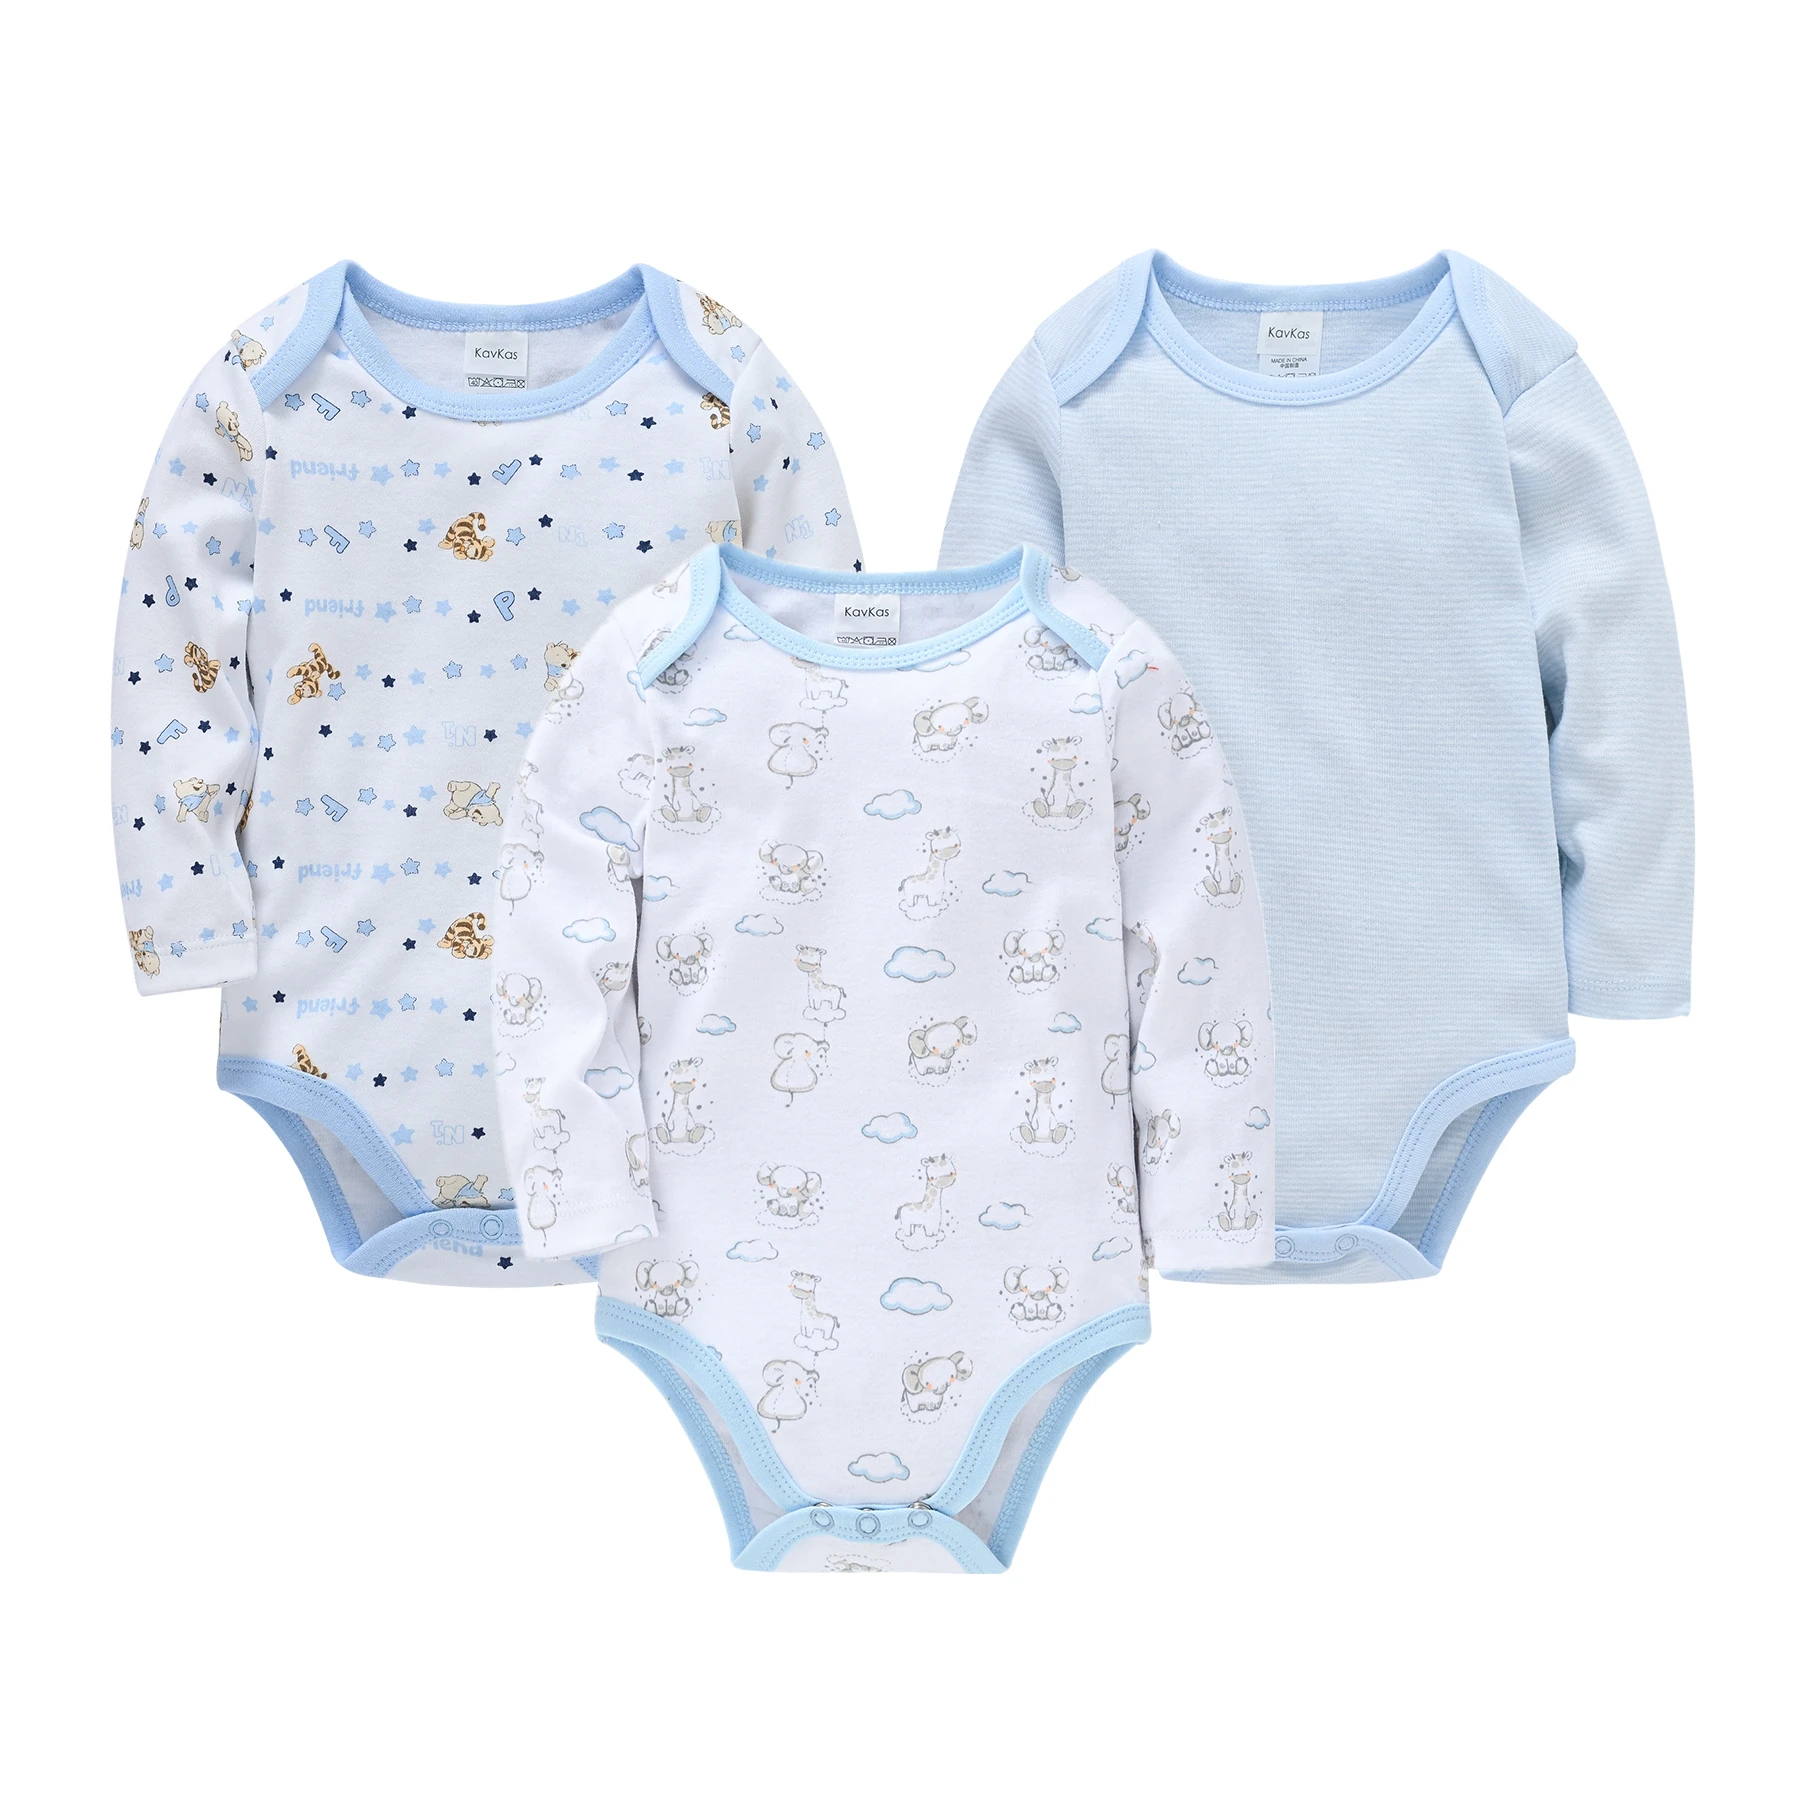 Sleepers Baby Girl 3PCS Pyjamas Set Newborn Boy Pijamas Bebe Fille  Sleepsuits Cotton Ropa Bebe De Newborn Sleepers Baby Pjiamas|Blanket  Sleepers| - AliExpress